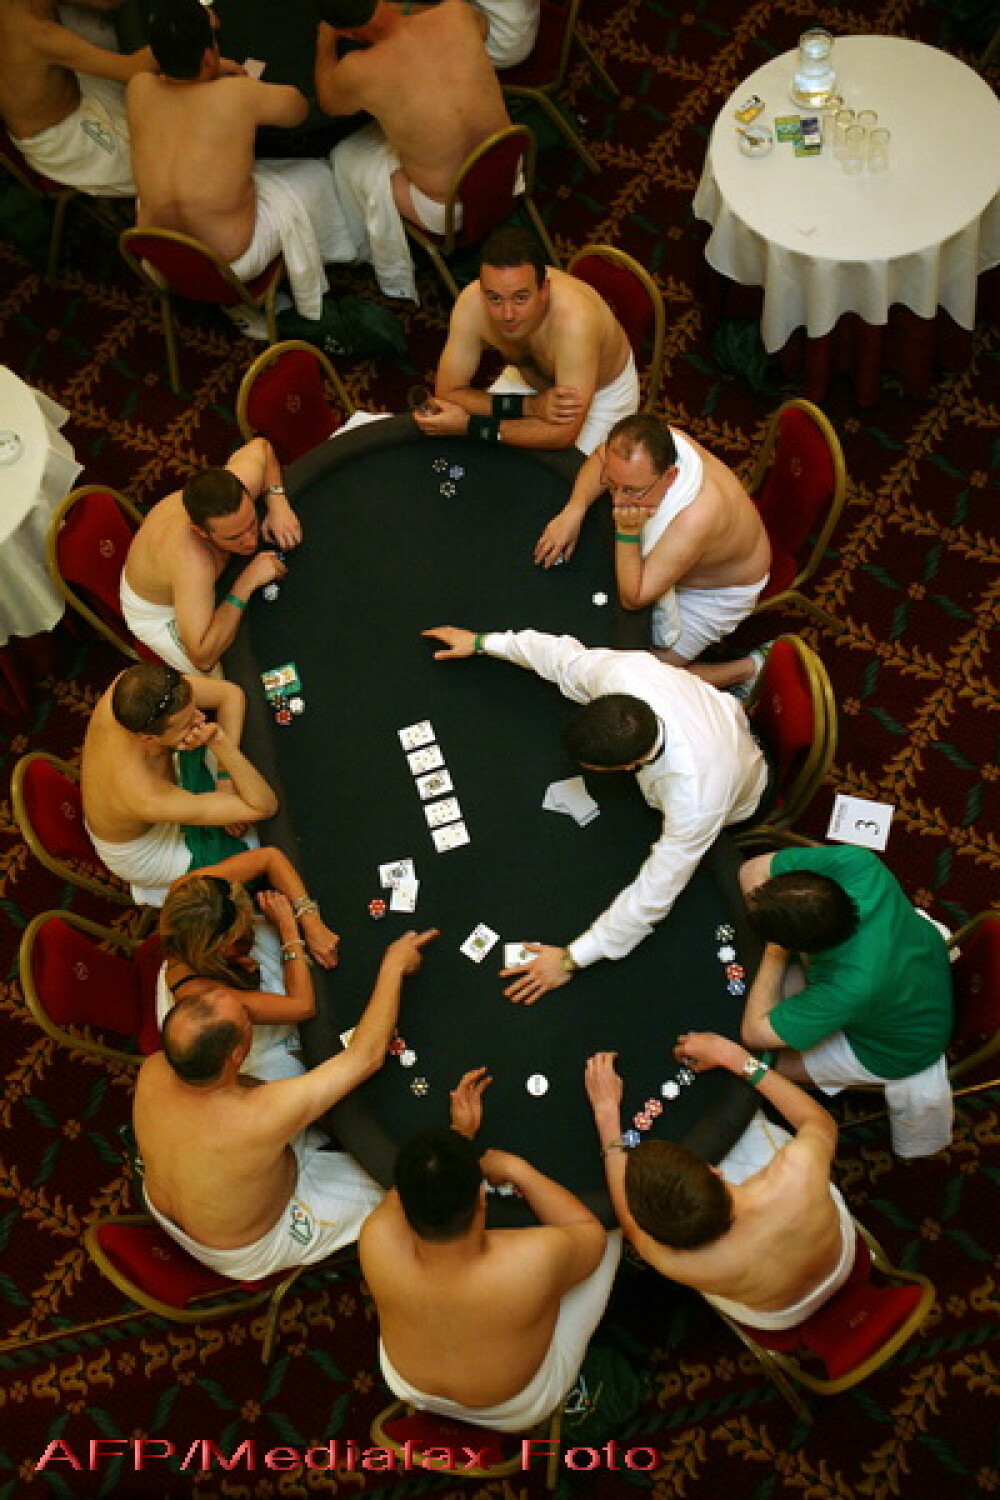 Vrei sa participi la turneul mondial de poker pe dezbracate? FOTO! - Imaginea 2